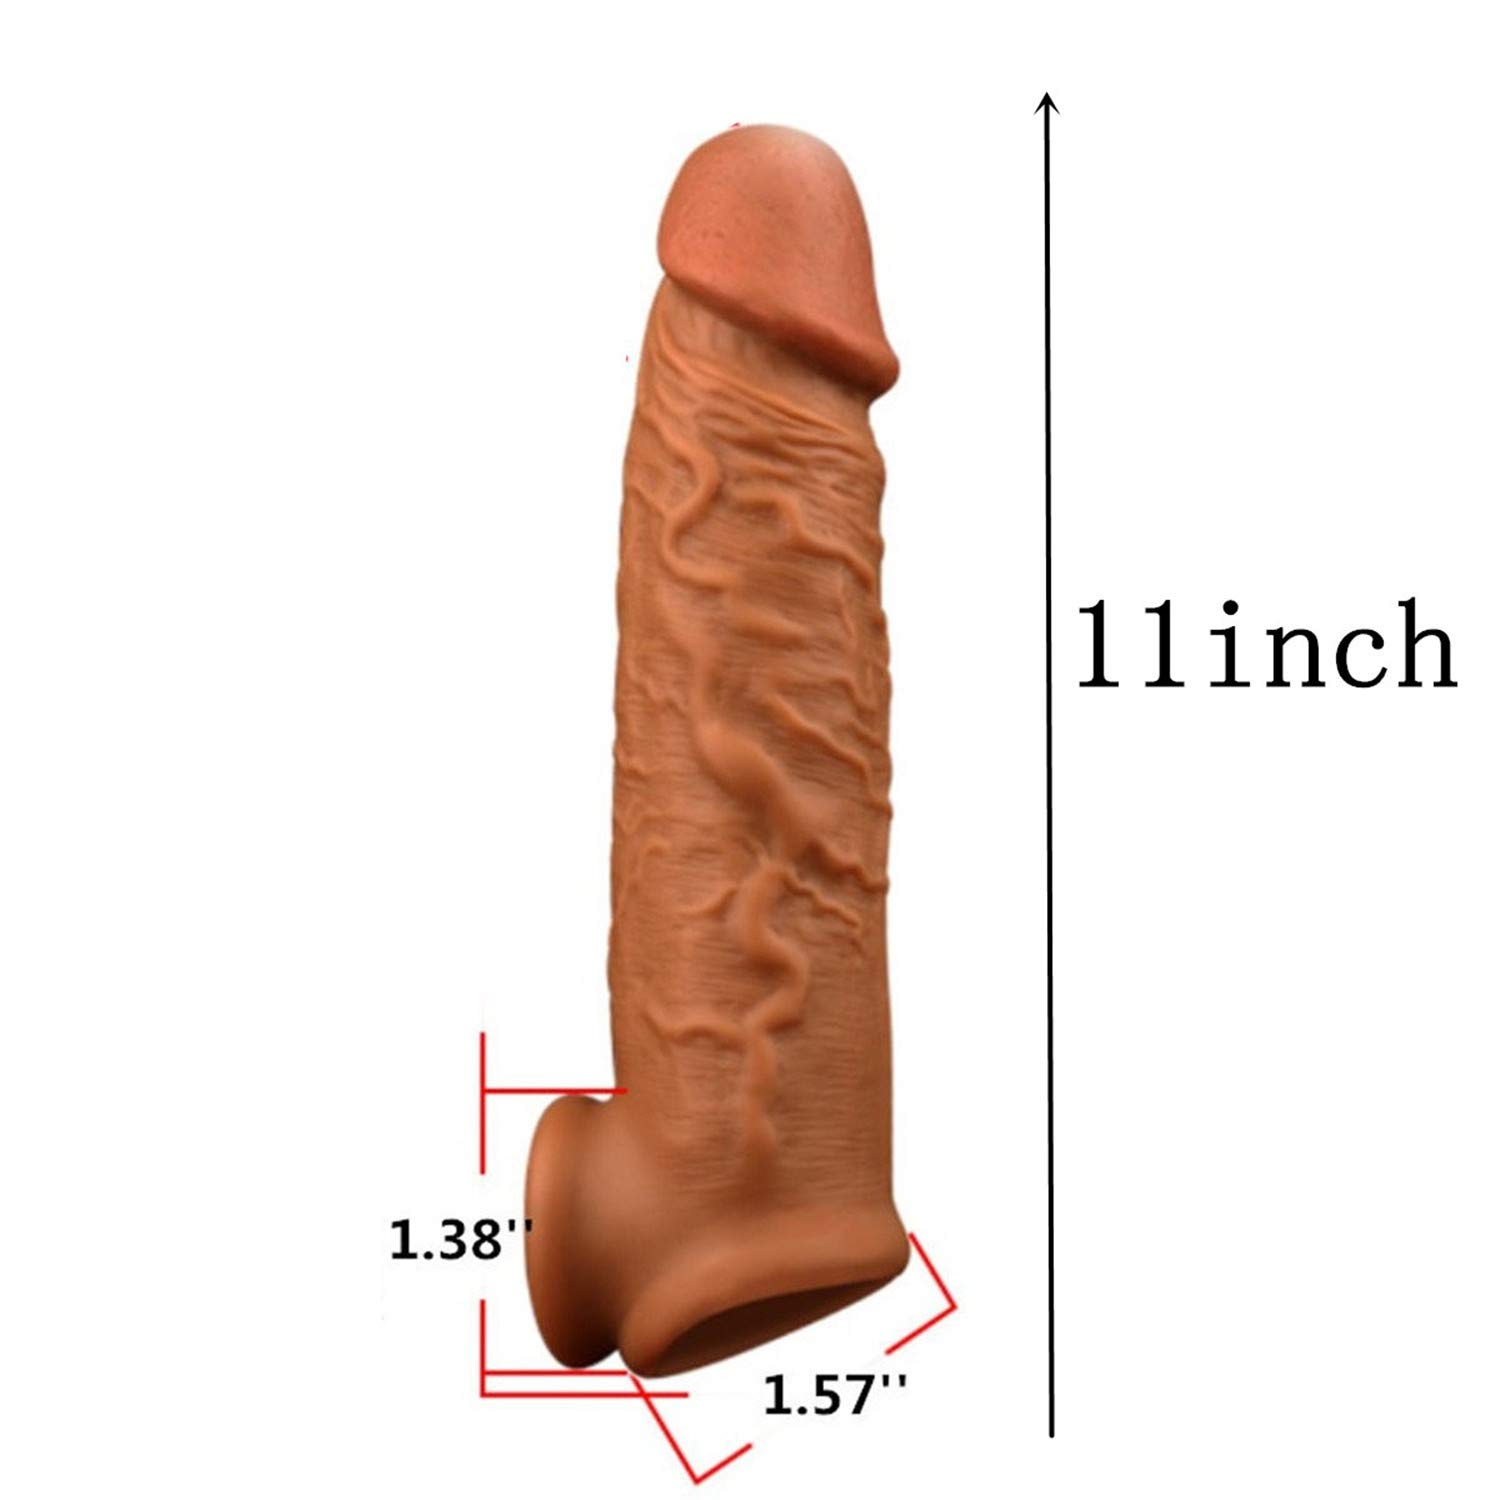 11 inch penis